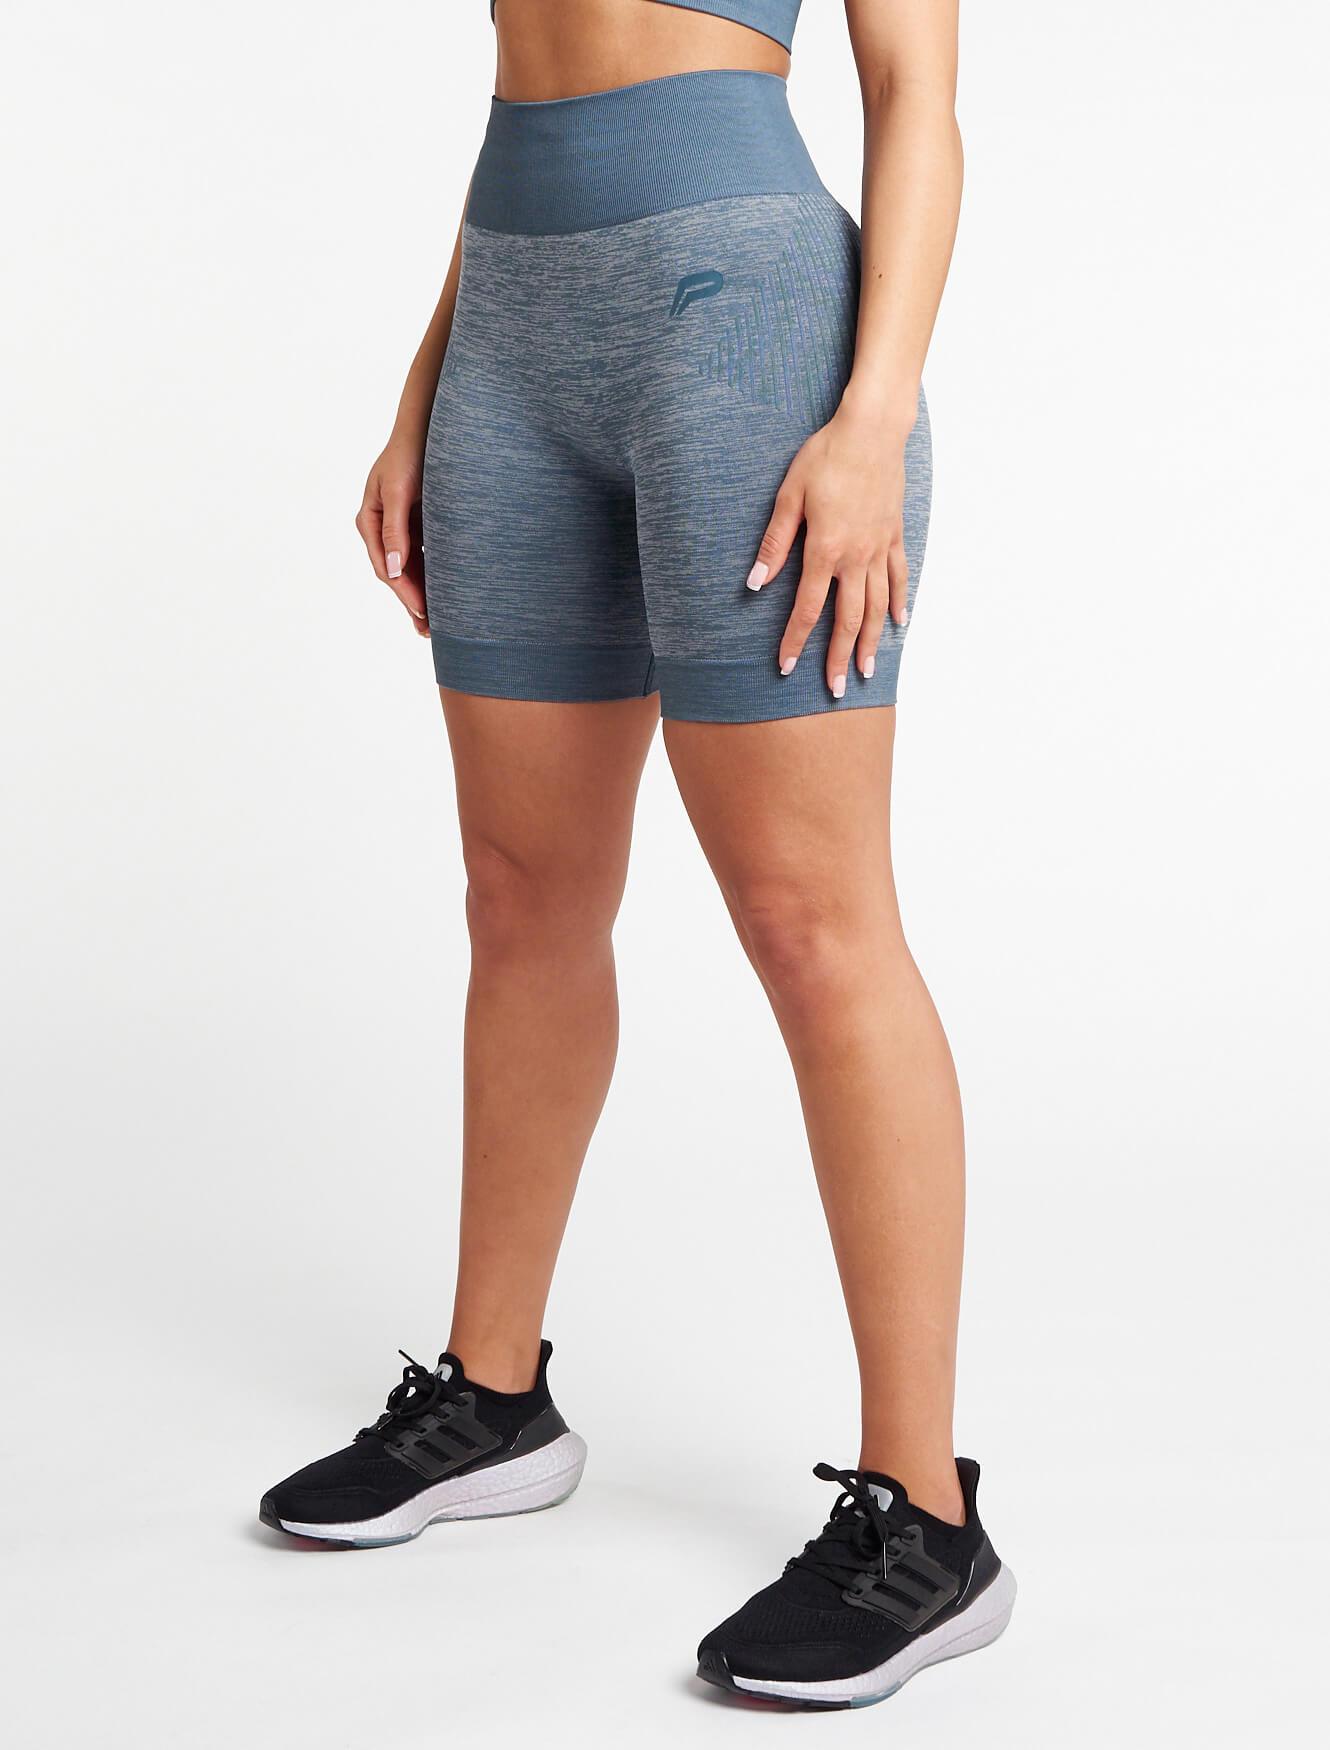 ADAPT Seamless Shorts / Slate Blue Pursue Fitness 1